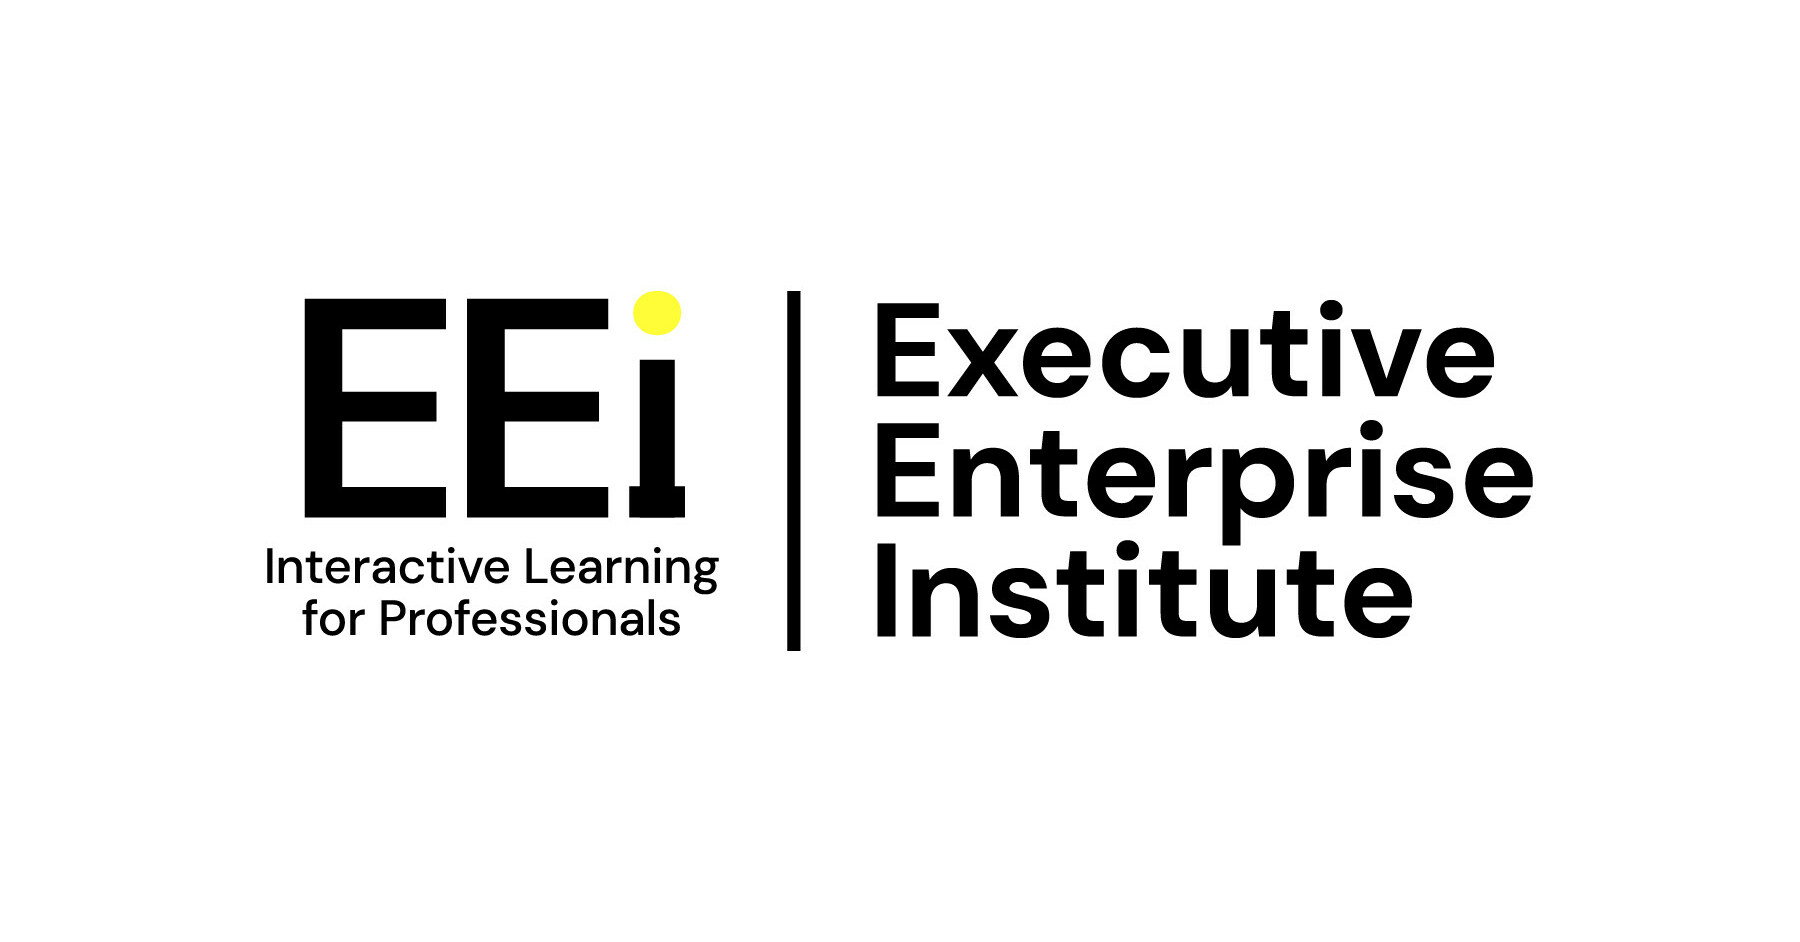 EEi Ushers in New Era, Executive Enterprise Institute Conference